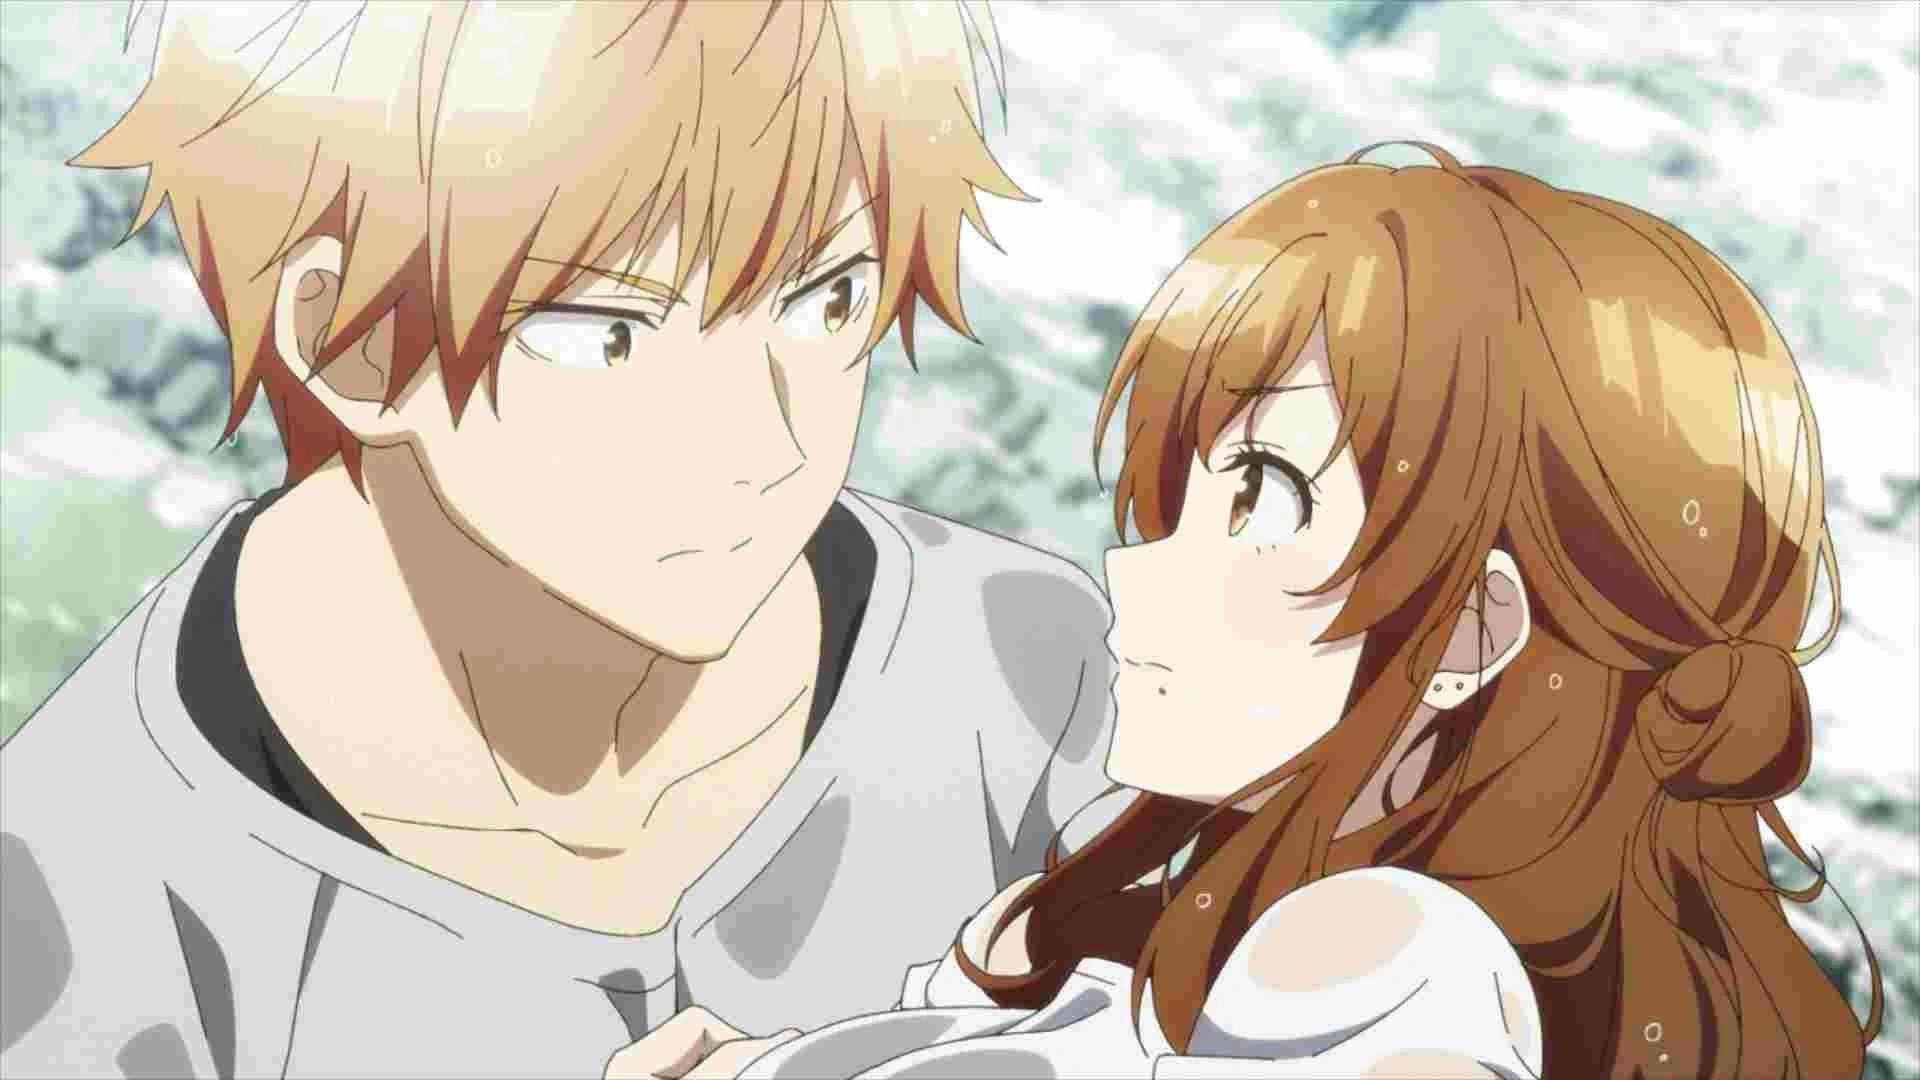 5 Animes de Romance Escolar Fascinantes: Animes com Romance